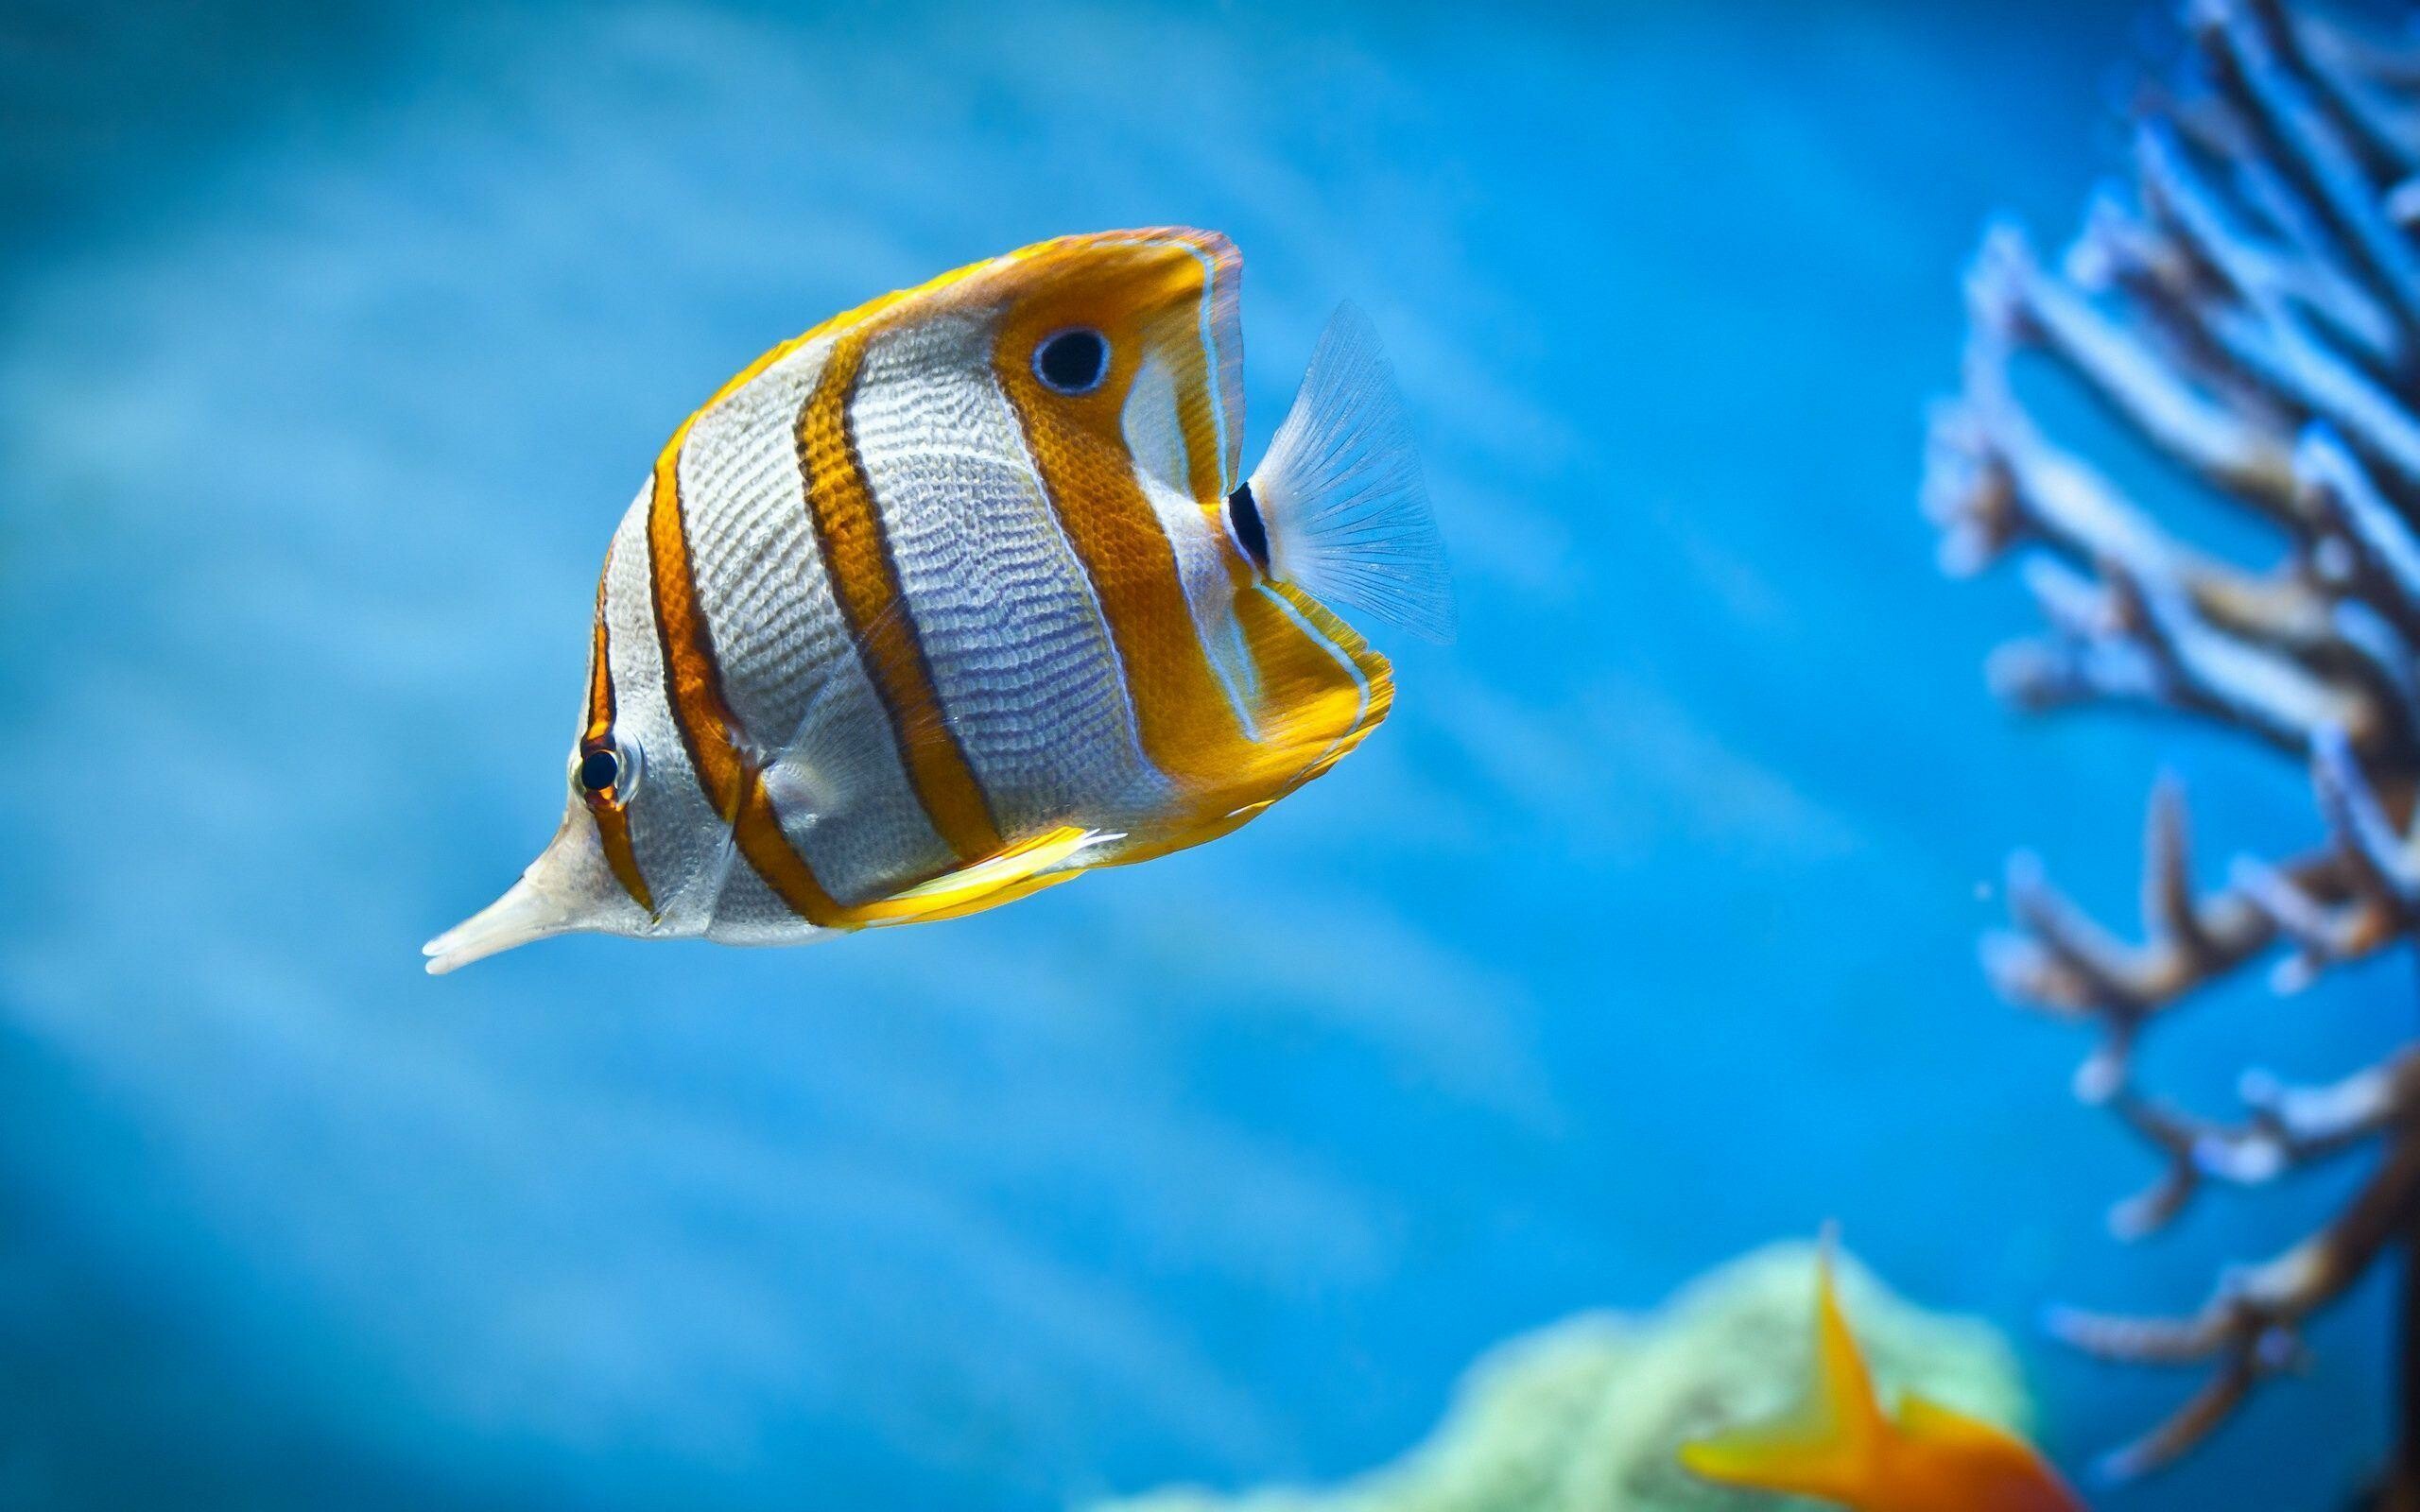 Cool fish backgrounds, Aquatic wonderland, Underwater elegance, Diverse marine life, 2560x1600 HD Desktop